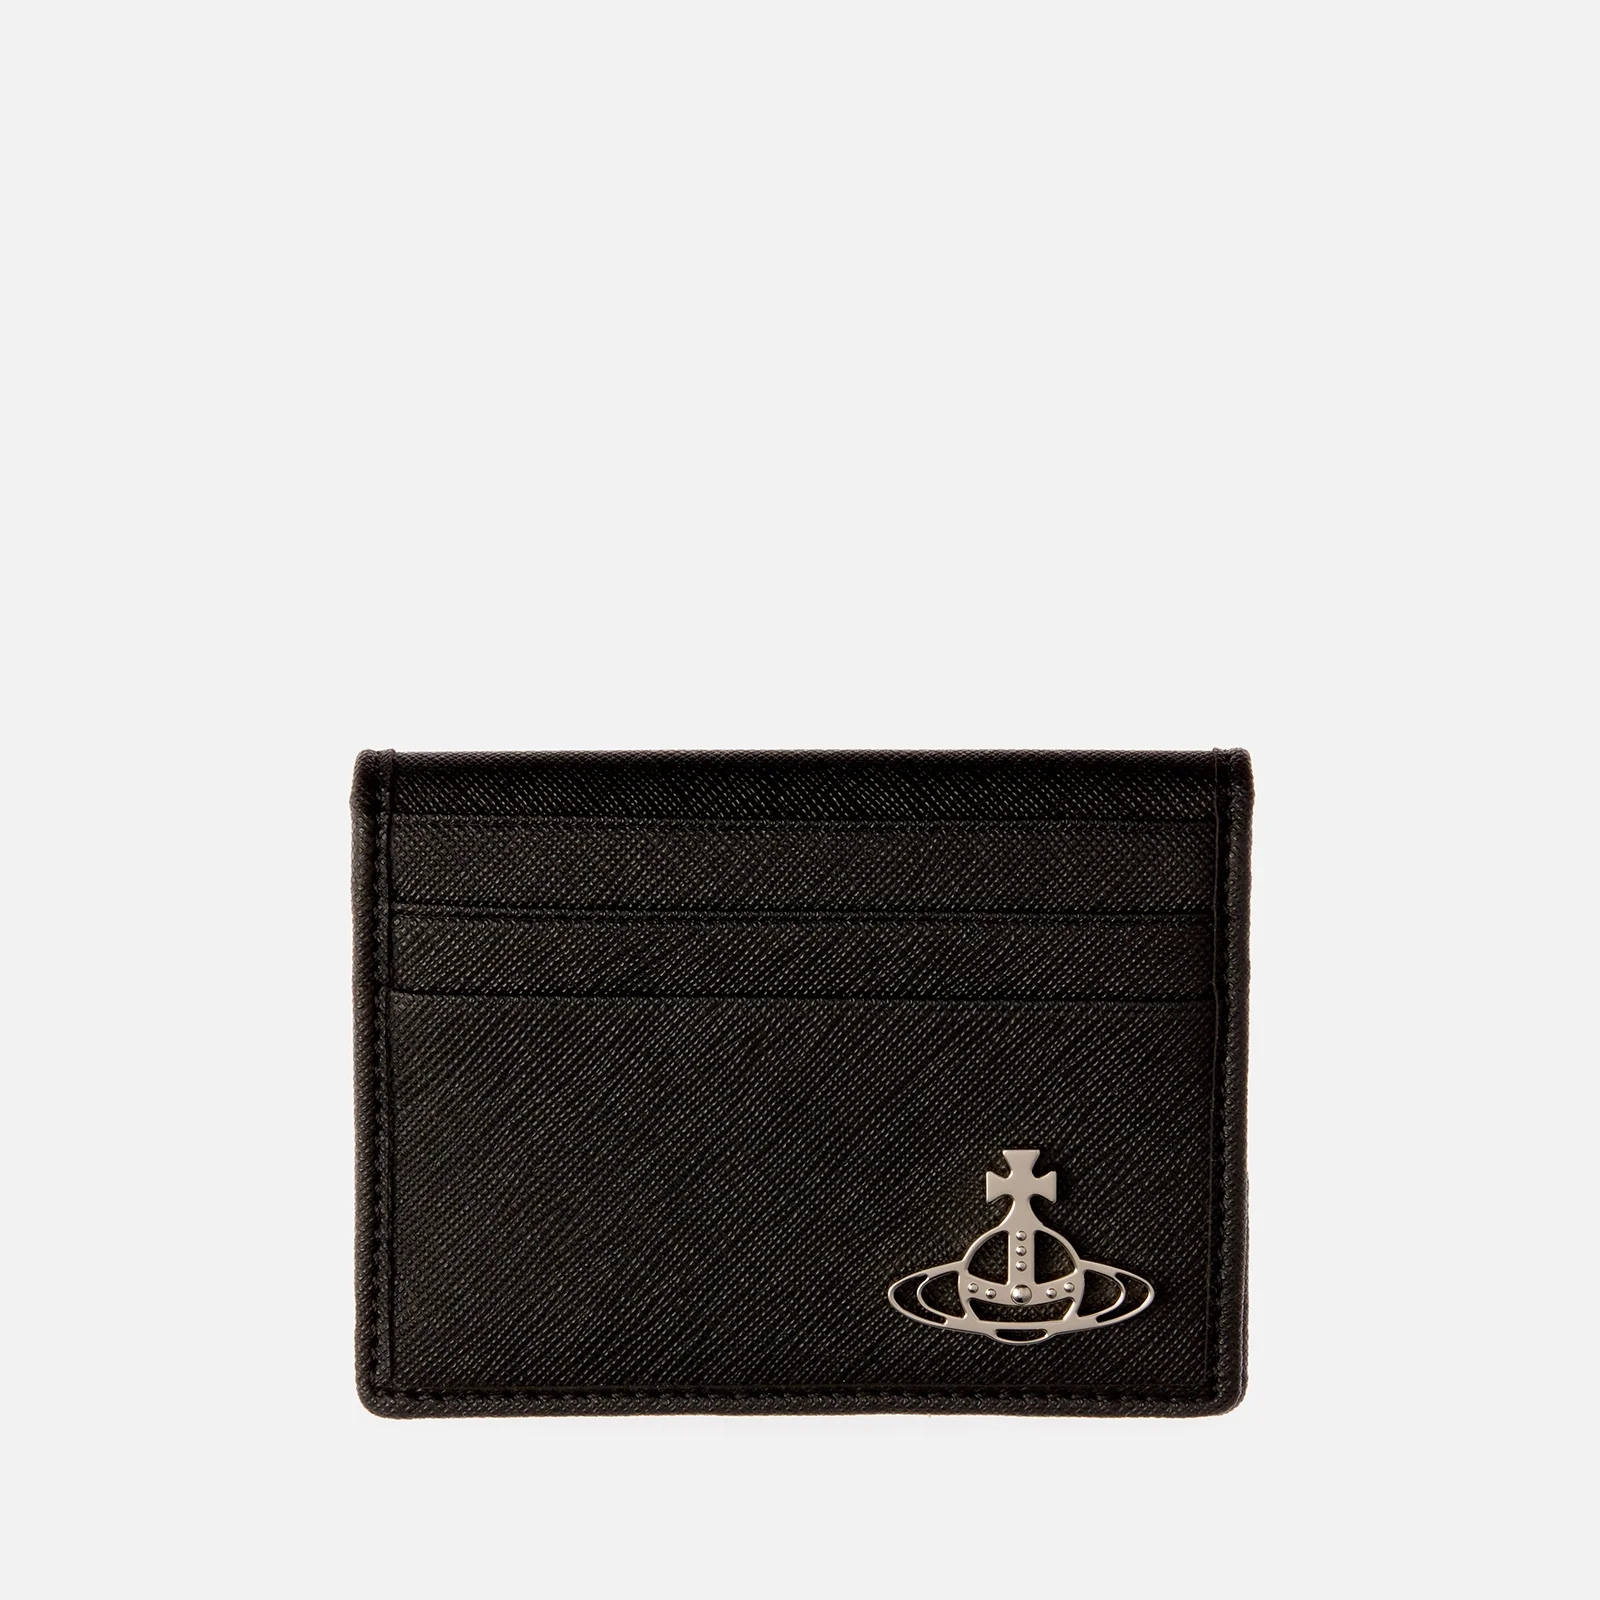 Vivienne Westwood Biogreen Faux Saffiano Leather Cardholder Image 1